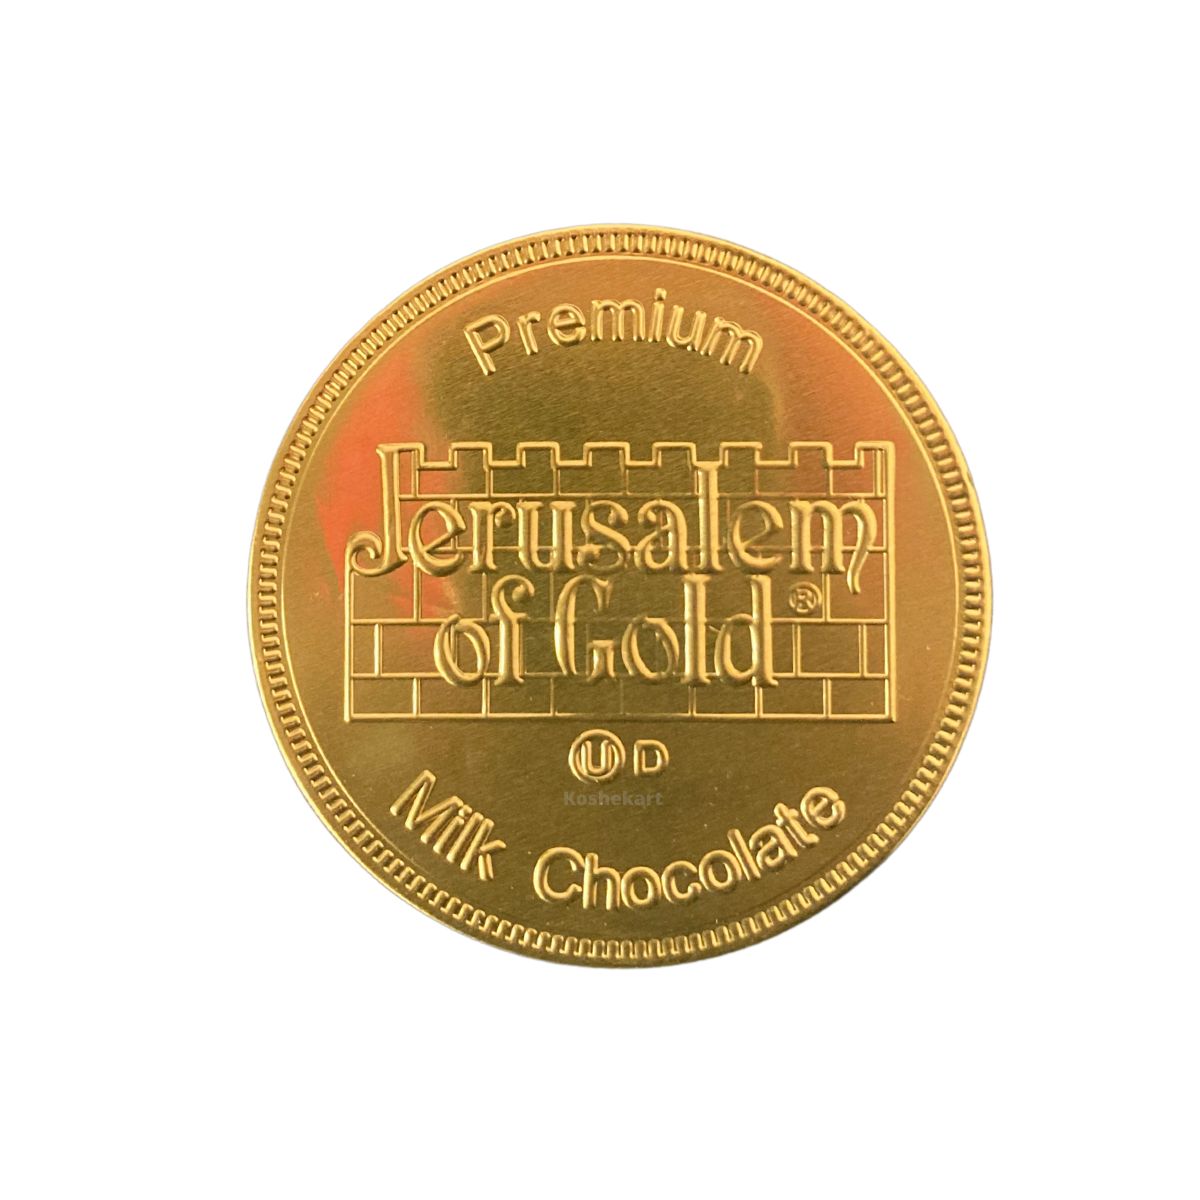 Jerusalem Gold Milk Chocolate Gold Medallion 0.81 oz